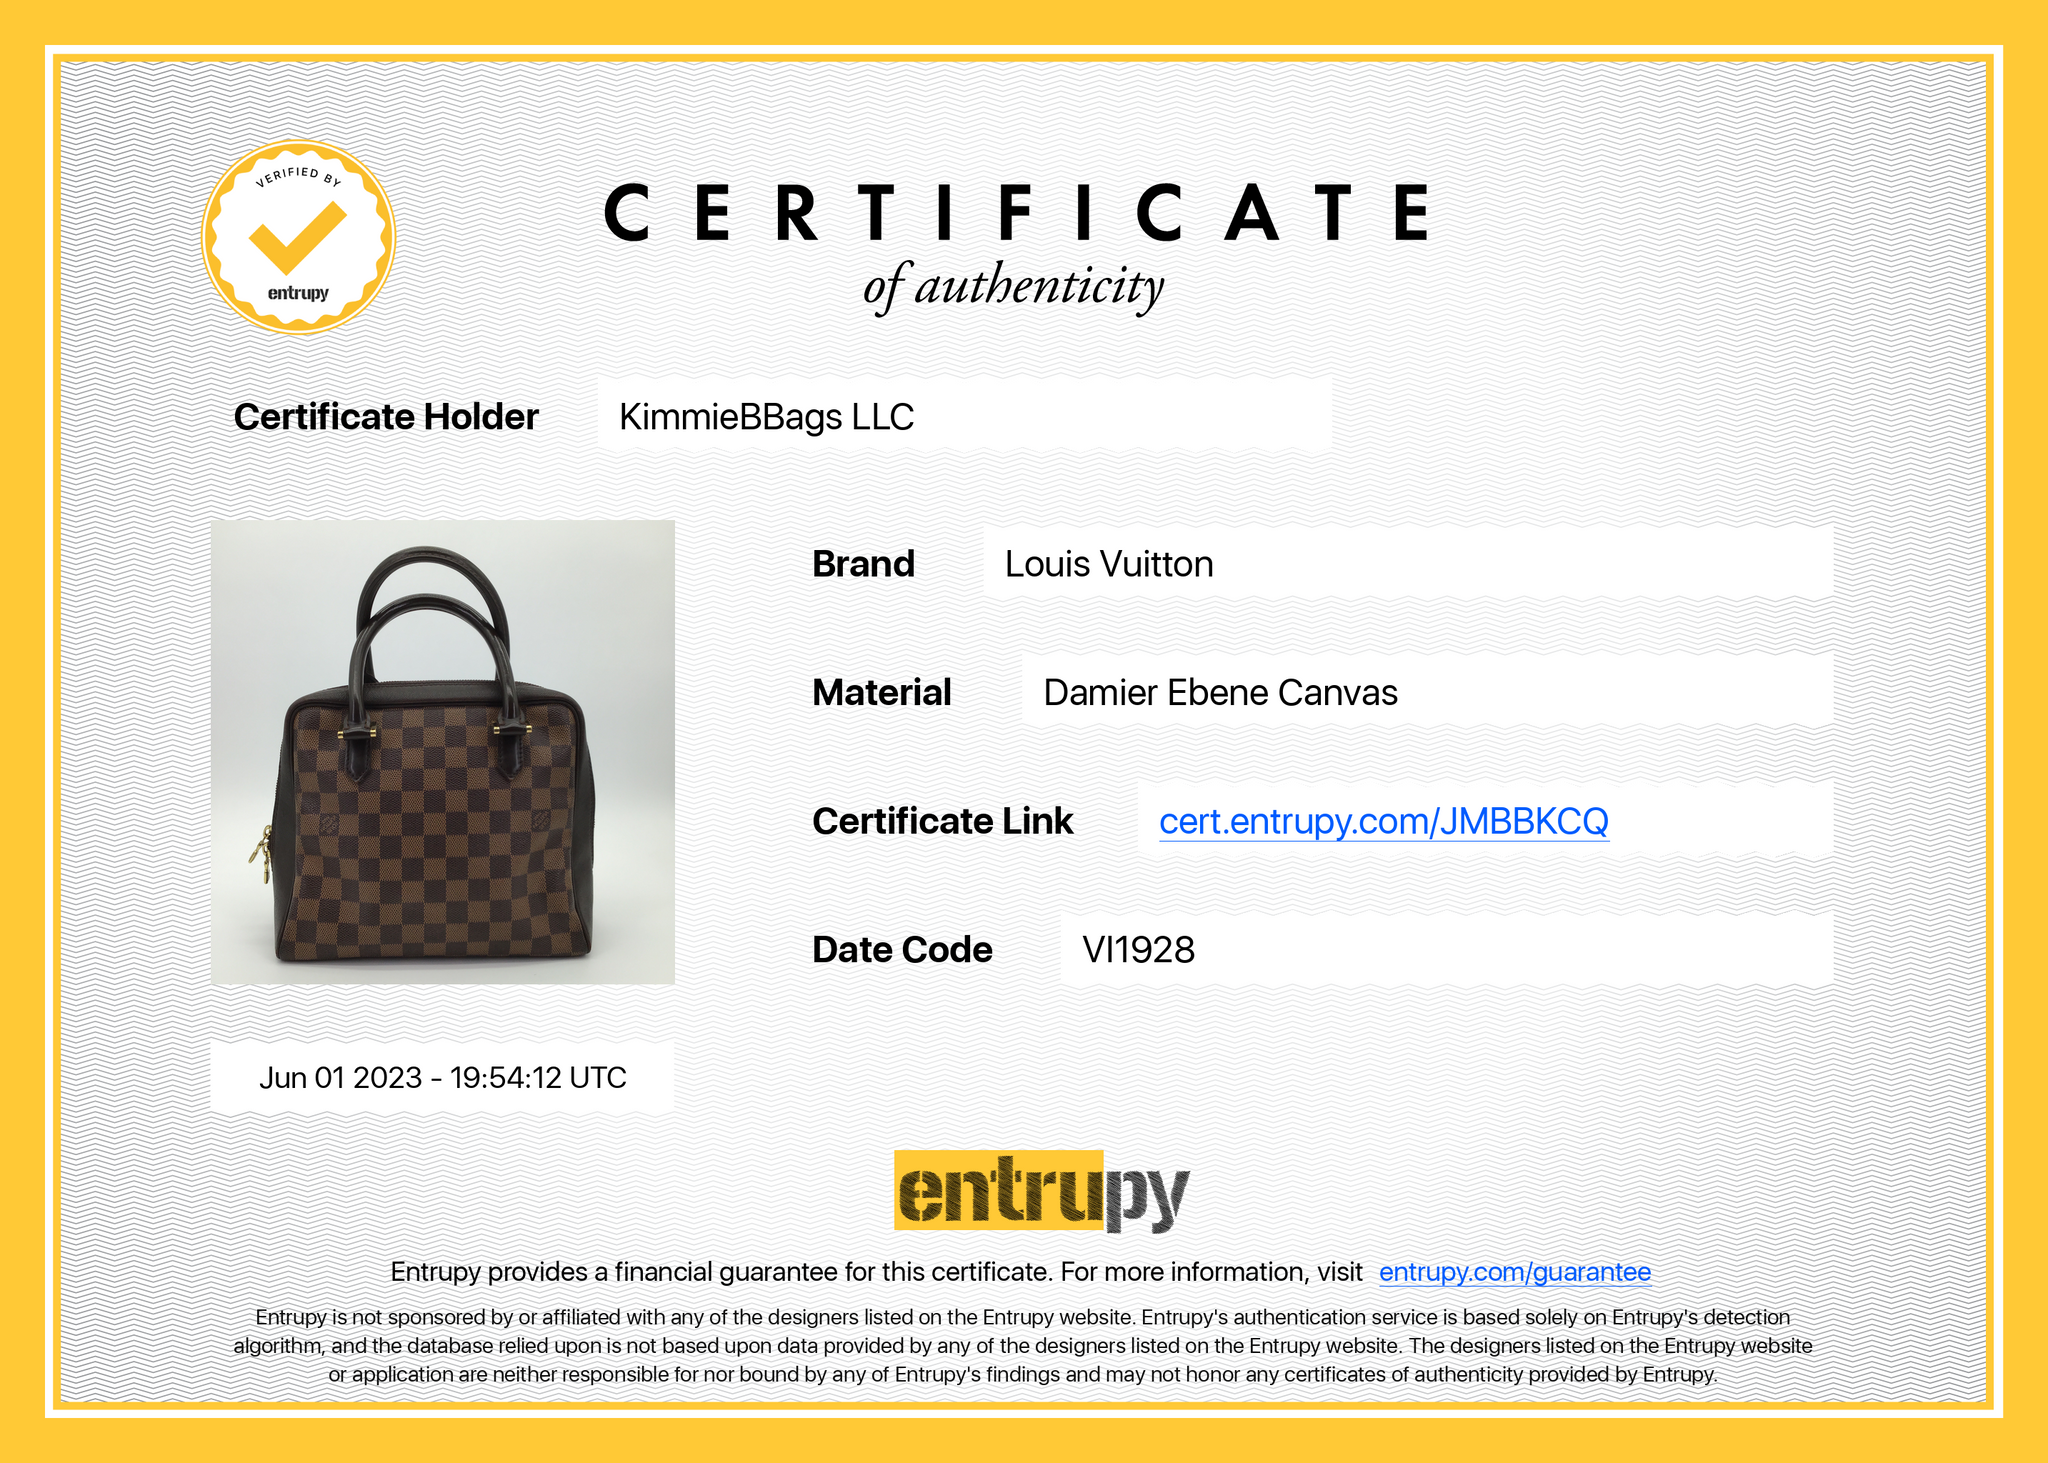 Pre-Owned Louis Vuitton Brea NM Bag 212659/1